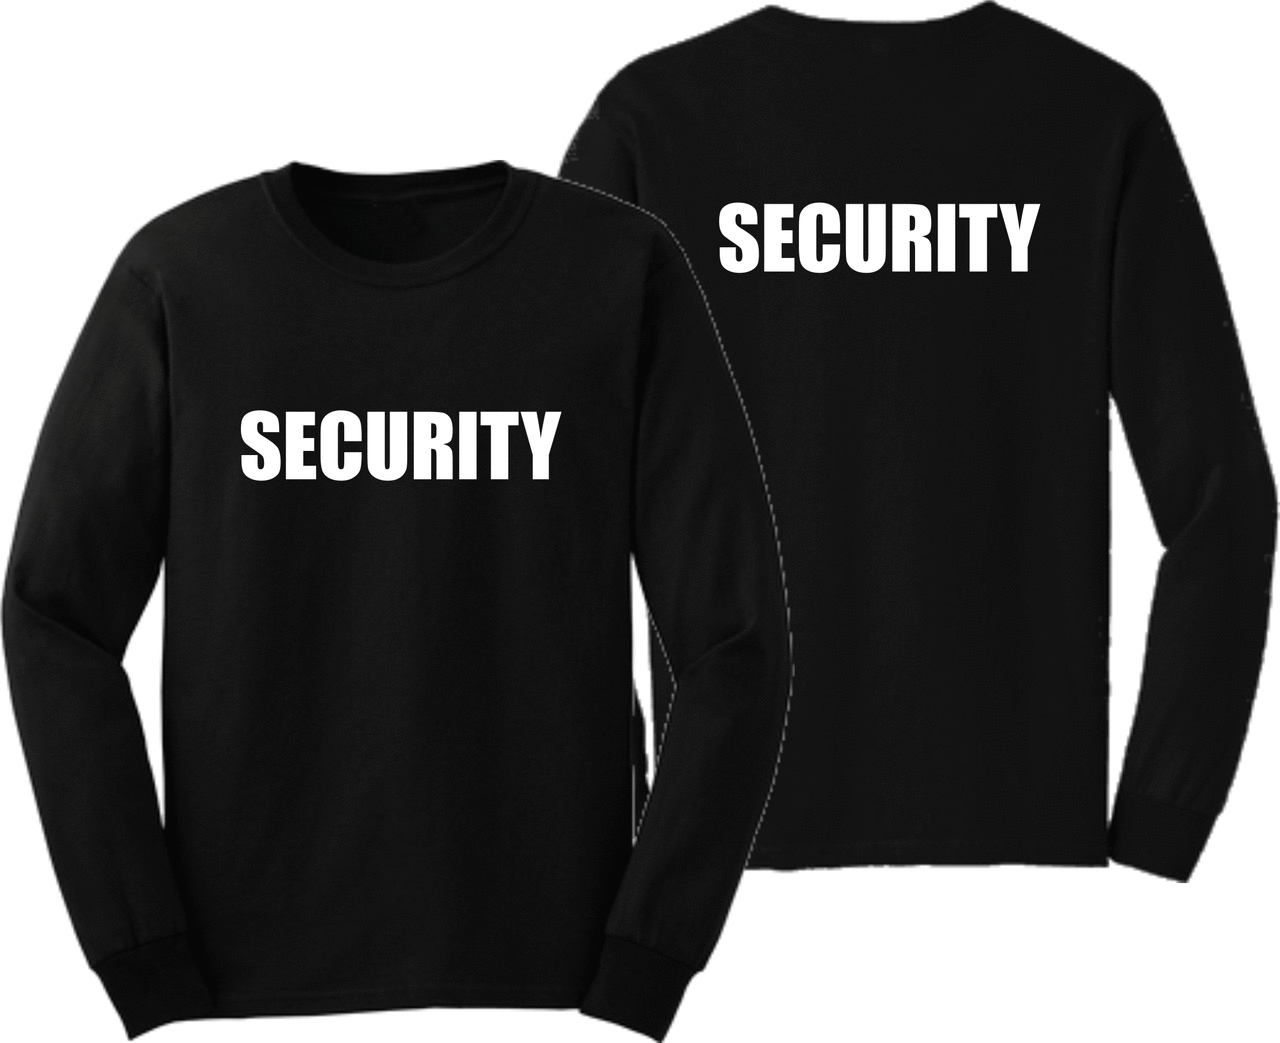 Long Sleeve Black Security T Shirt